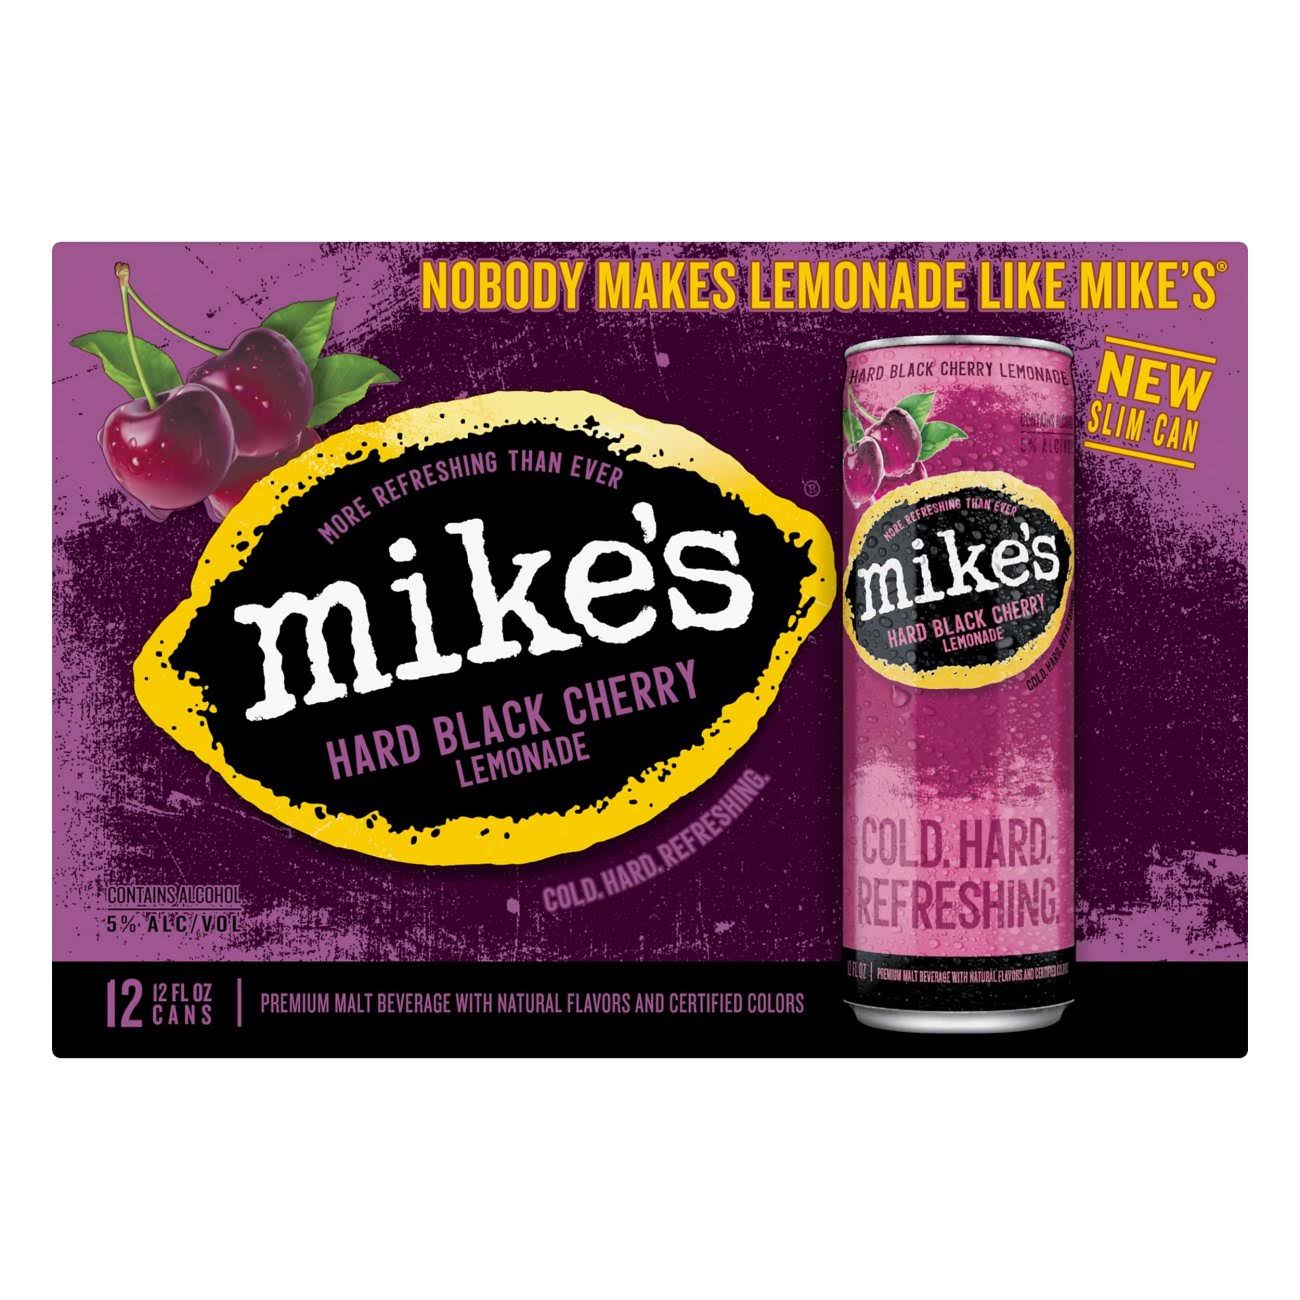 Mike's Beer, Malt Beverage, Premium, Hard Black Cherry Lemonade - 12 pack, 12 fl oz cans